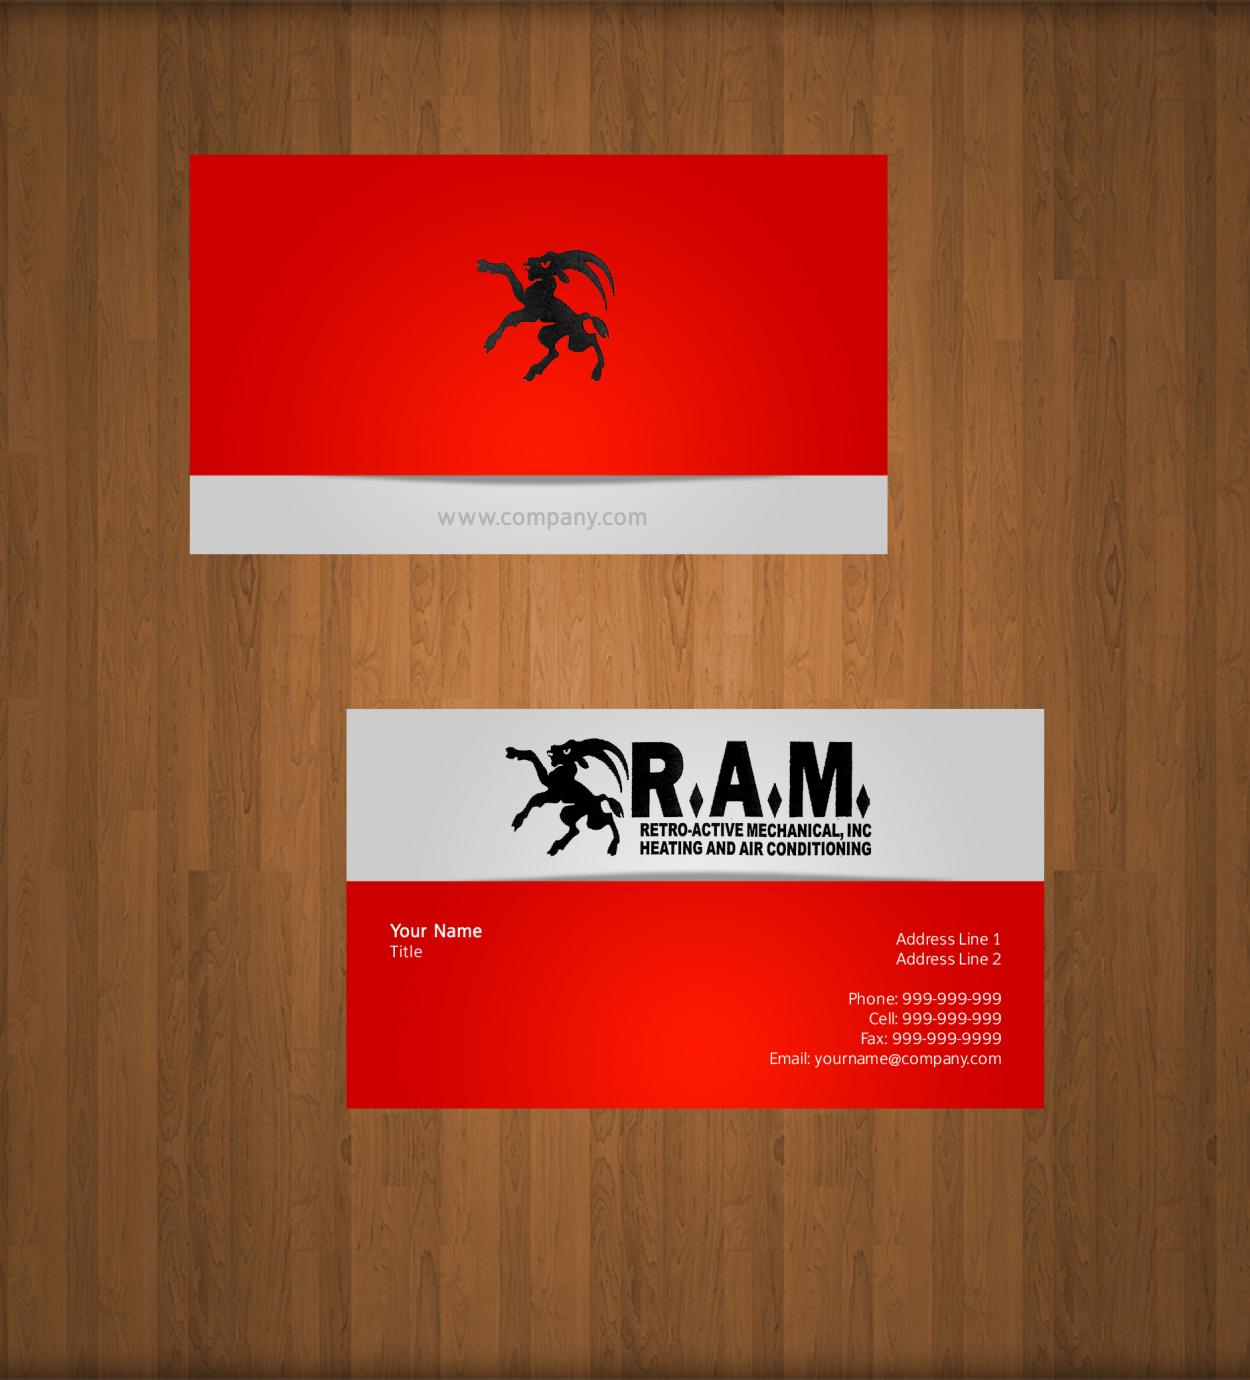 Business Card & Stationery Design entry 366415 submitted by adyyy to the Business Card & Stationery Design for Retro-Active Mechanical, Inc. (RAM) run by ramatlanta